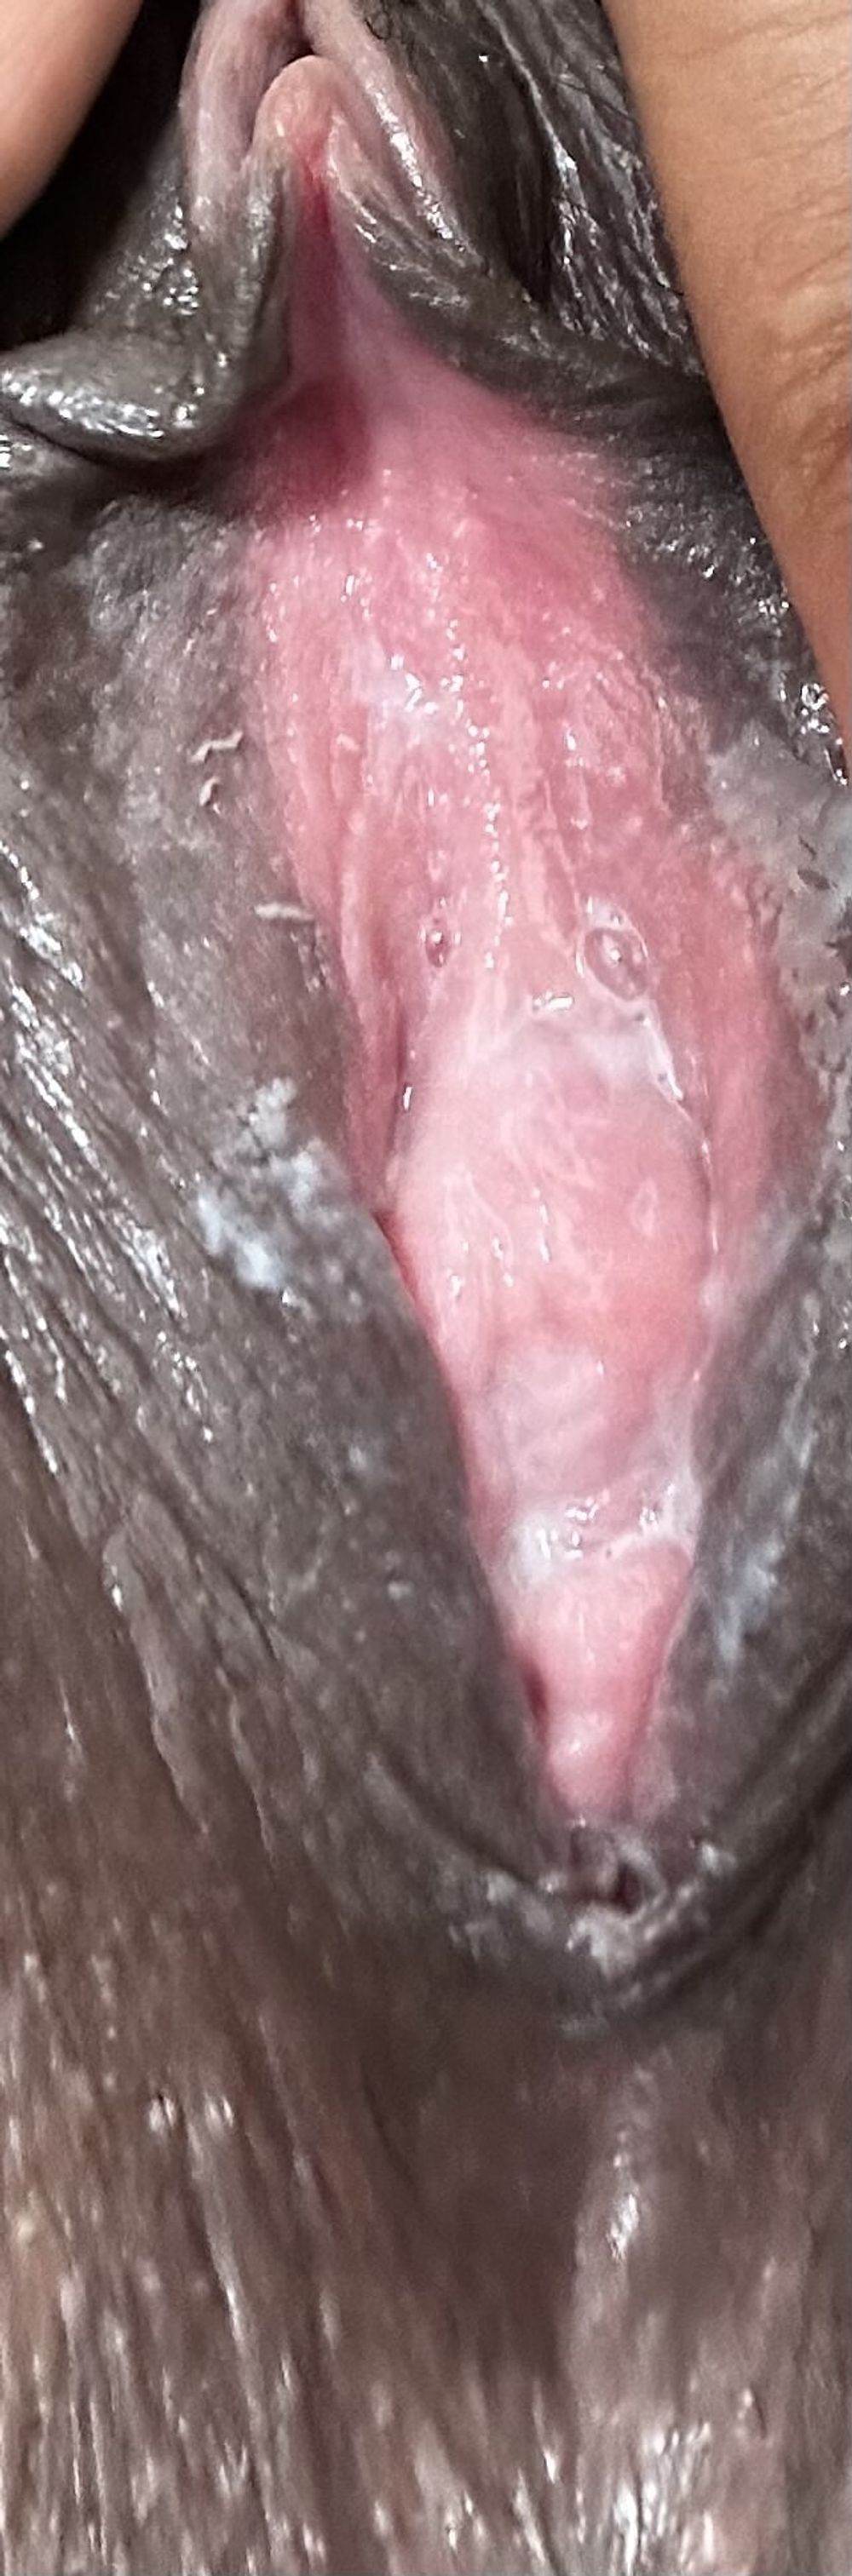 Black pussy close up 